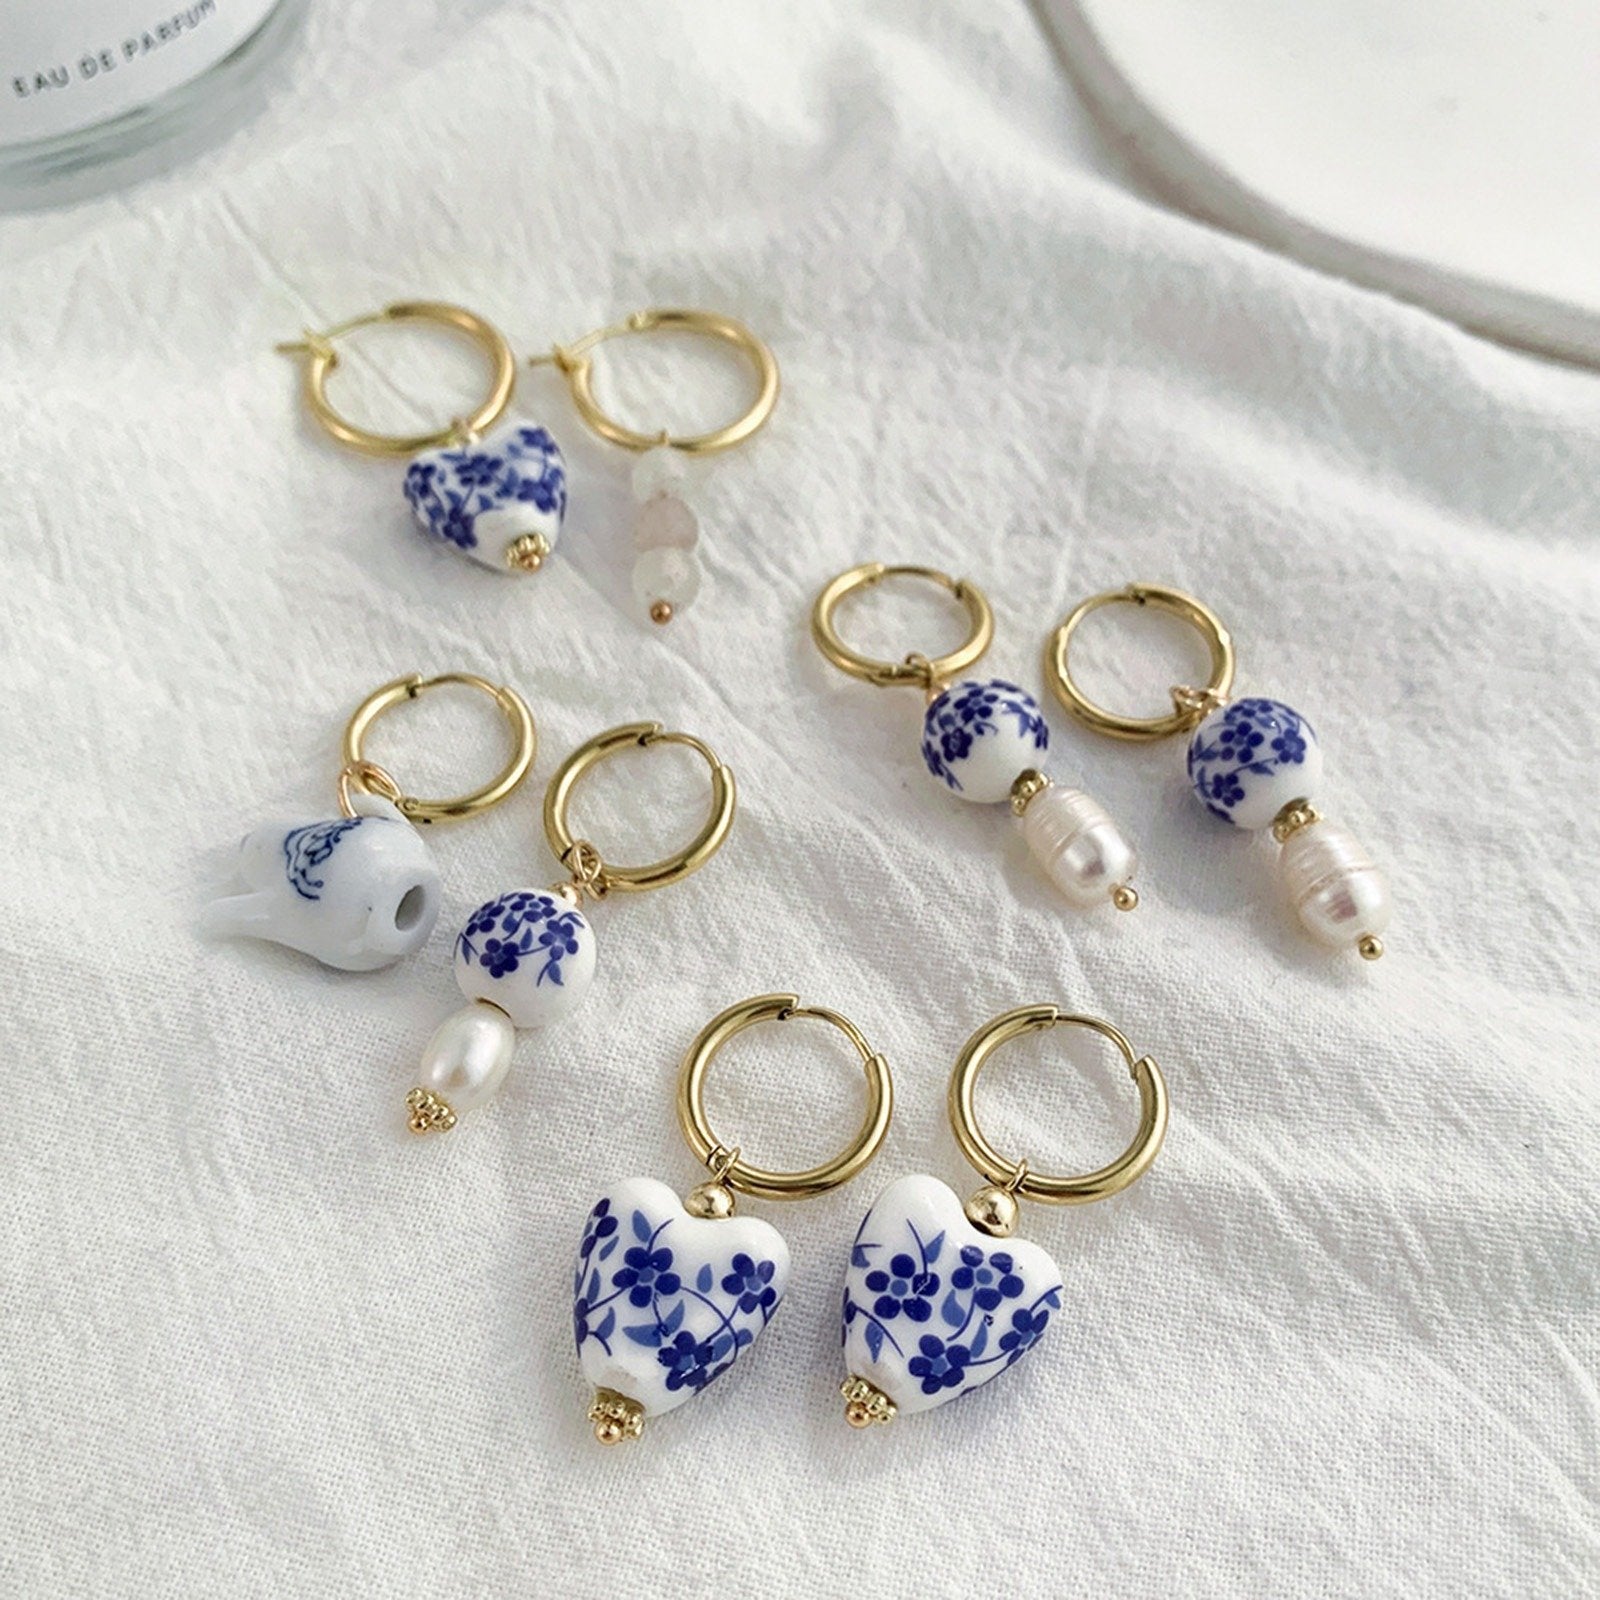 Blue and white ceramic earrings.